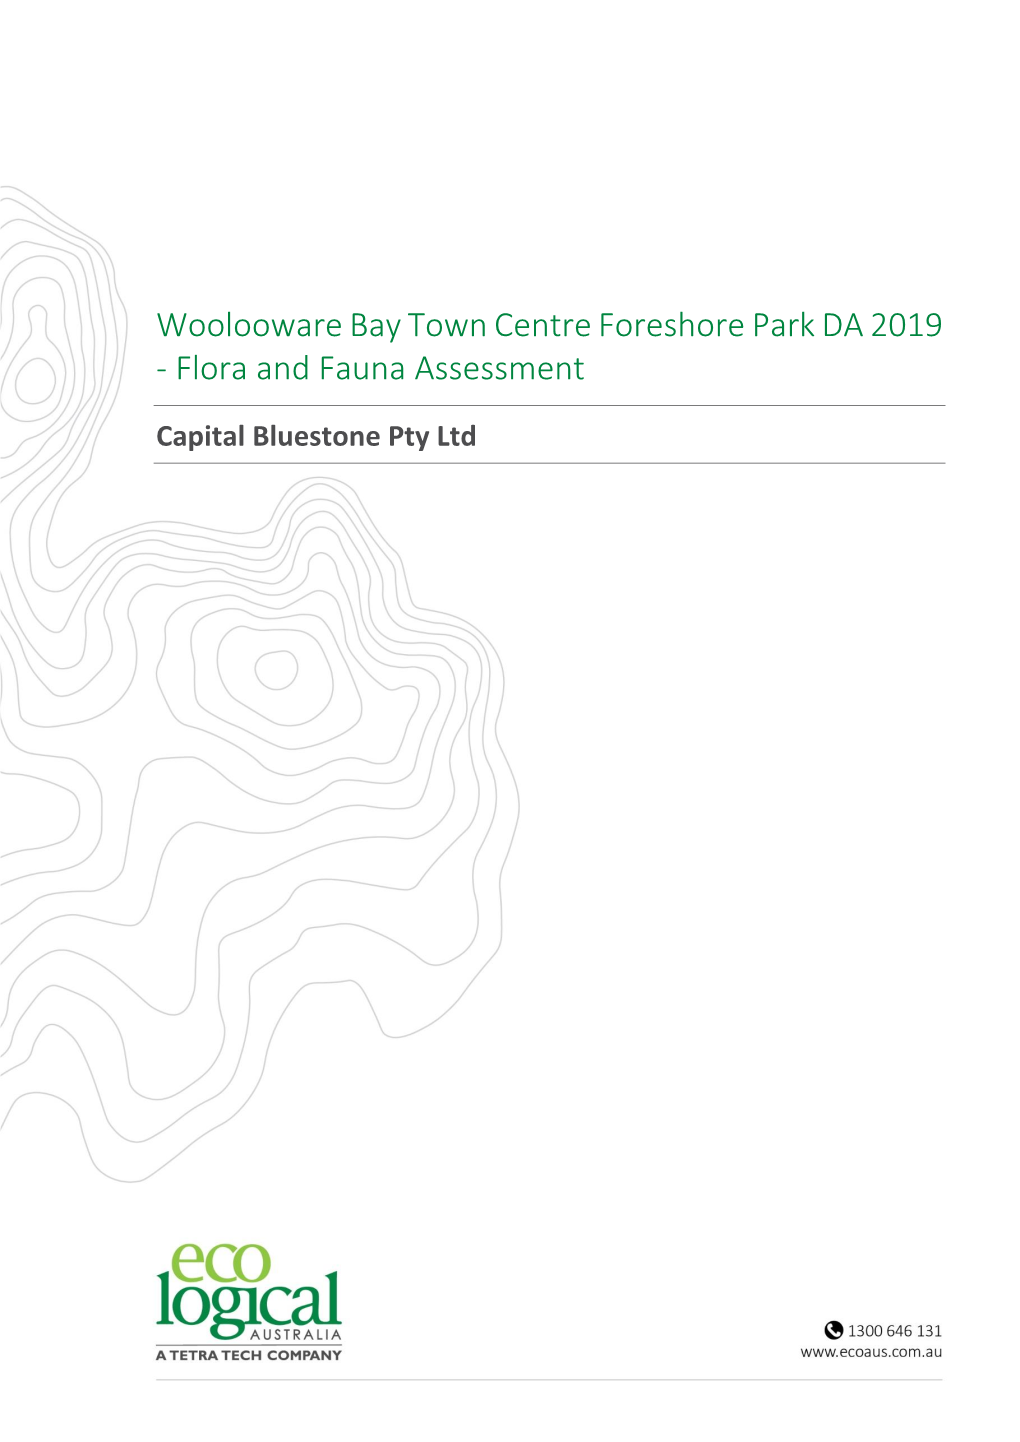 Woolooware Bay Town Centre Foreshore Park DA 2019 - Flora and Fauna Assessment